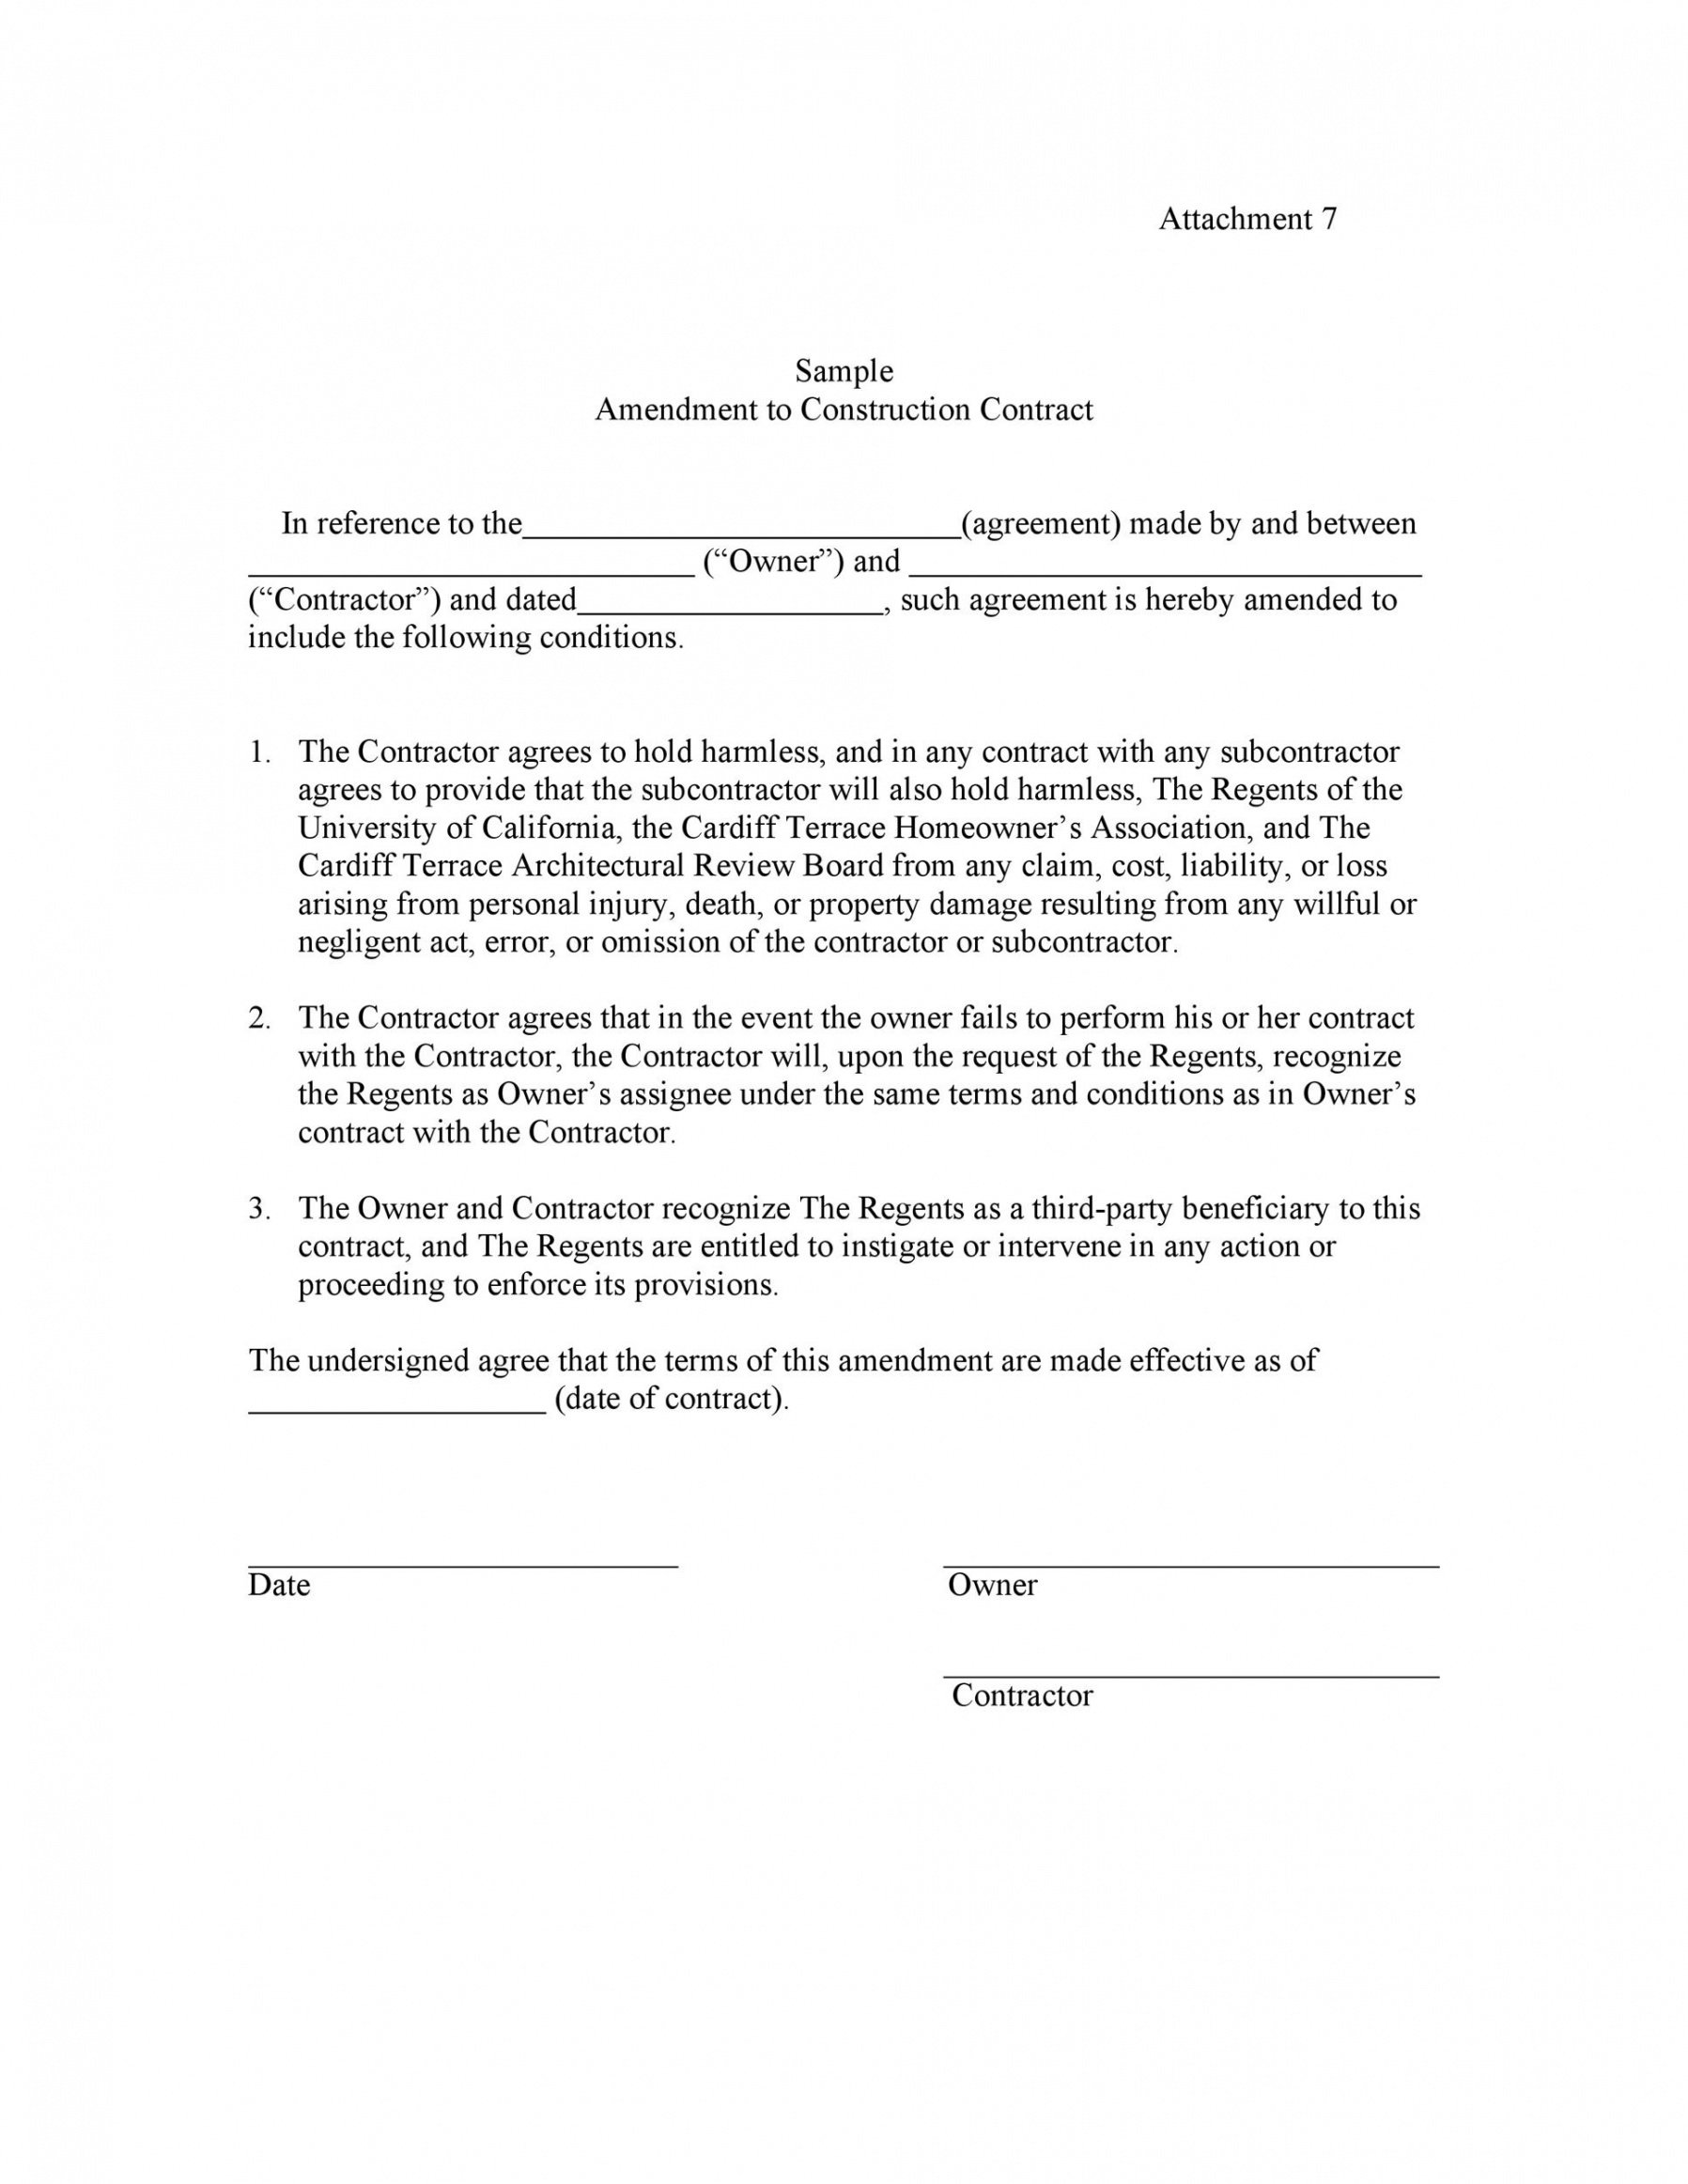 editable 44 professional contract amendment templates &amp; samples construction contract addendum template sample